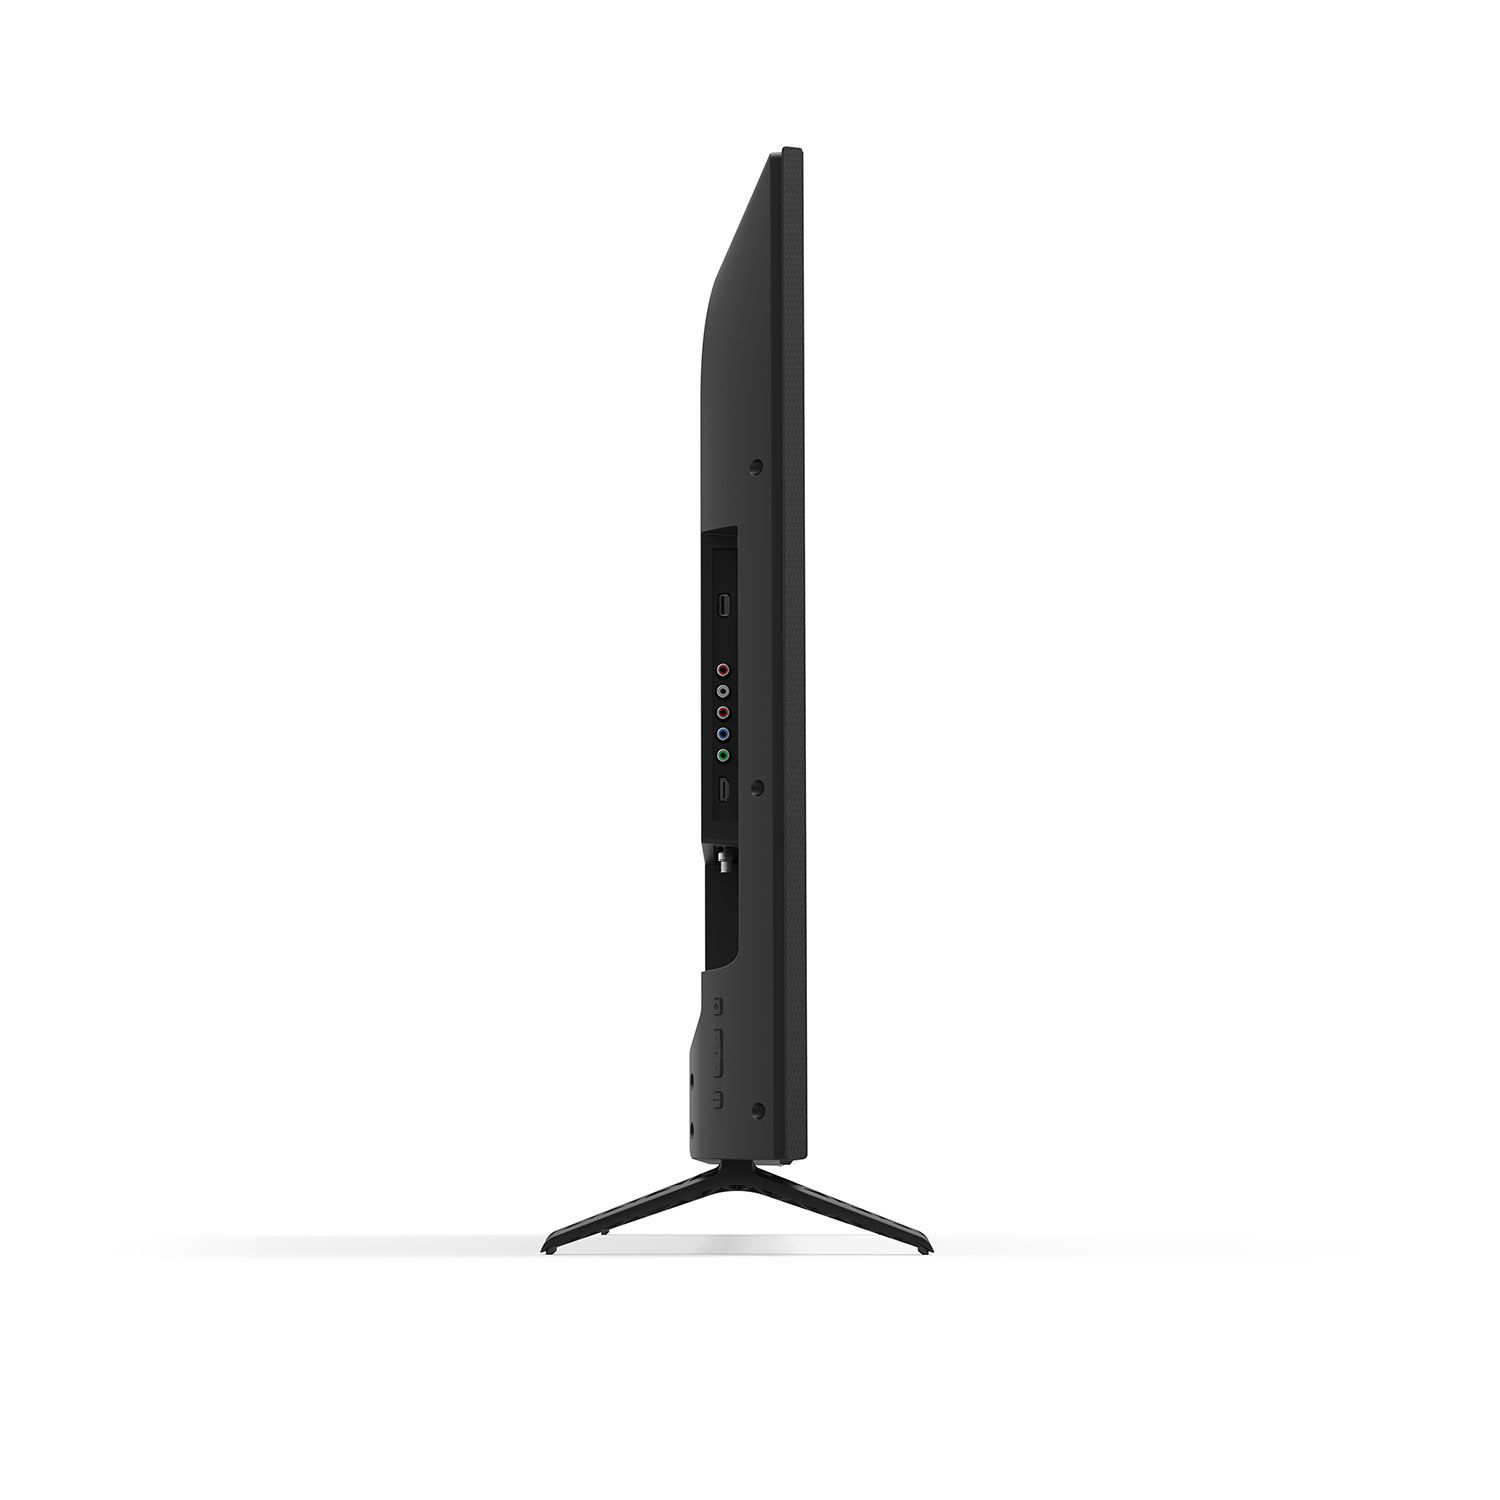 VIZIO D-series 50" (49.5" Diag.) Ultra HD Full-Array LED Smart TV, D50-E1 - image 4 of 6